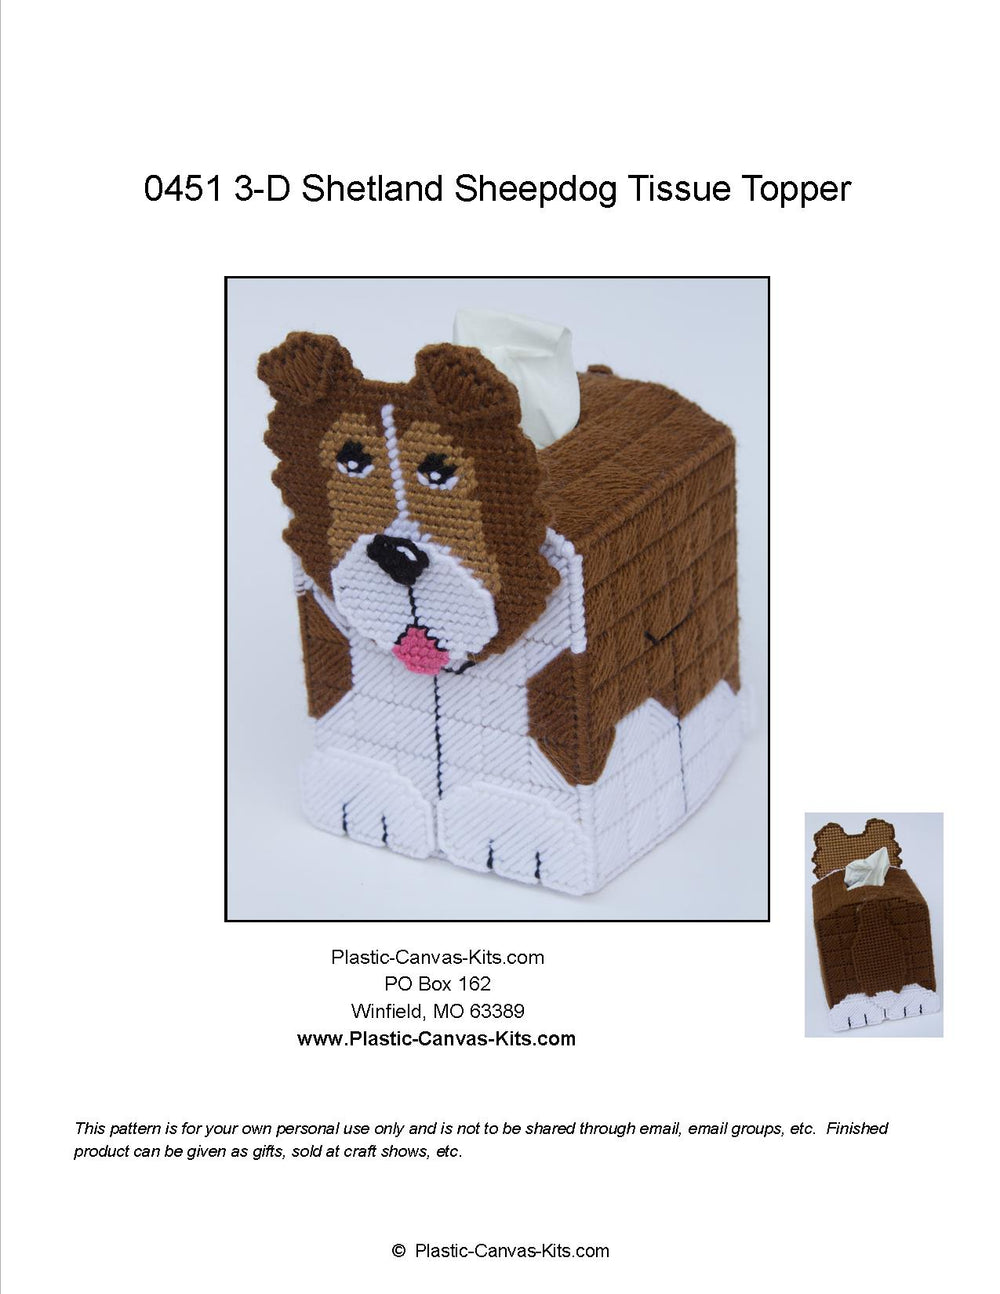 Shetland Sheepdog 3-D Tissue Topper